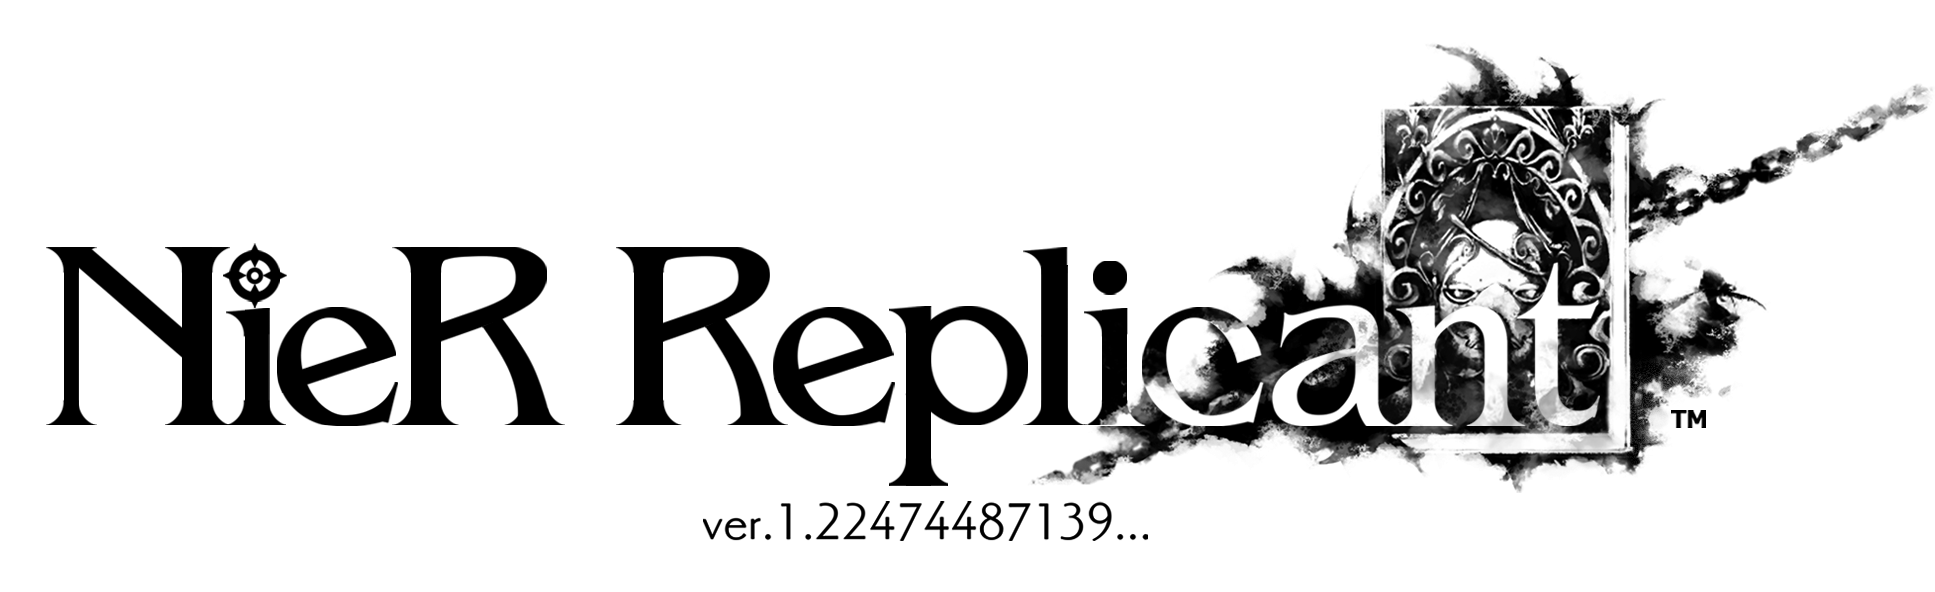 NieR Replicant ver.1.22474487139 - PS4, PlayStation 4